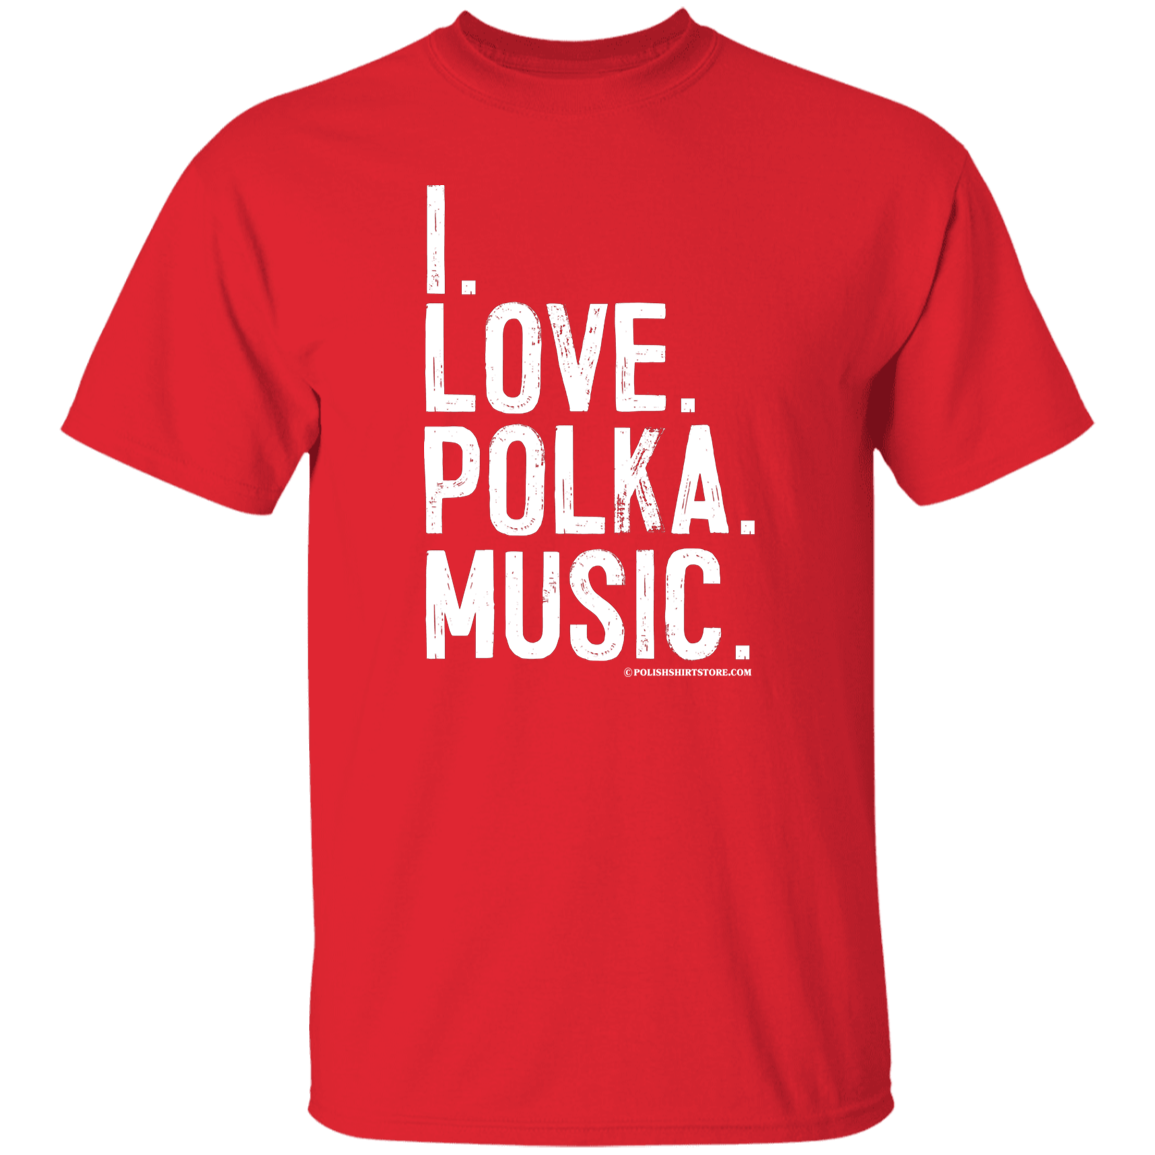 I Love Polka Music Apparel CustomCat G500 5.3 oz. T-Shirt Red S